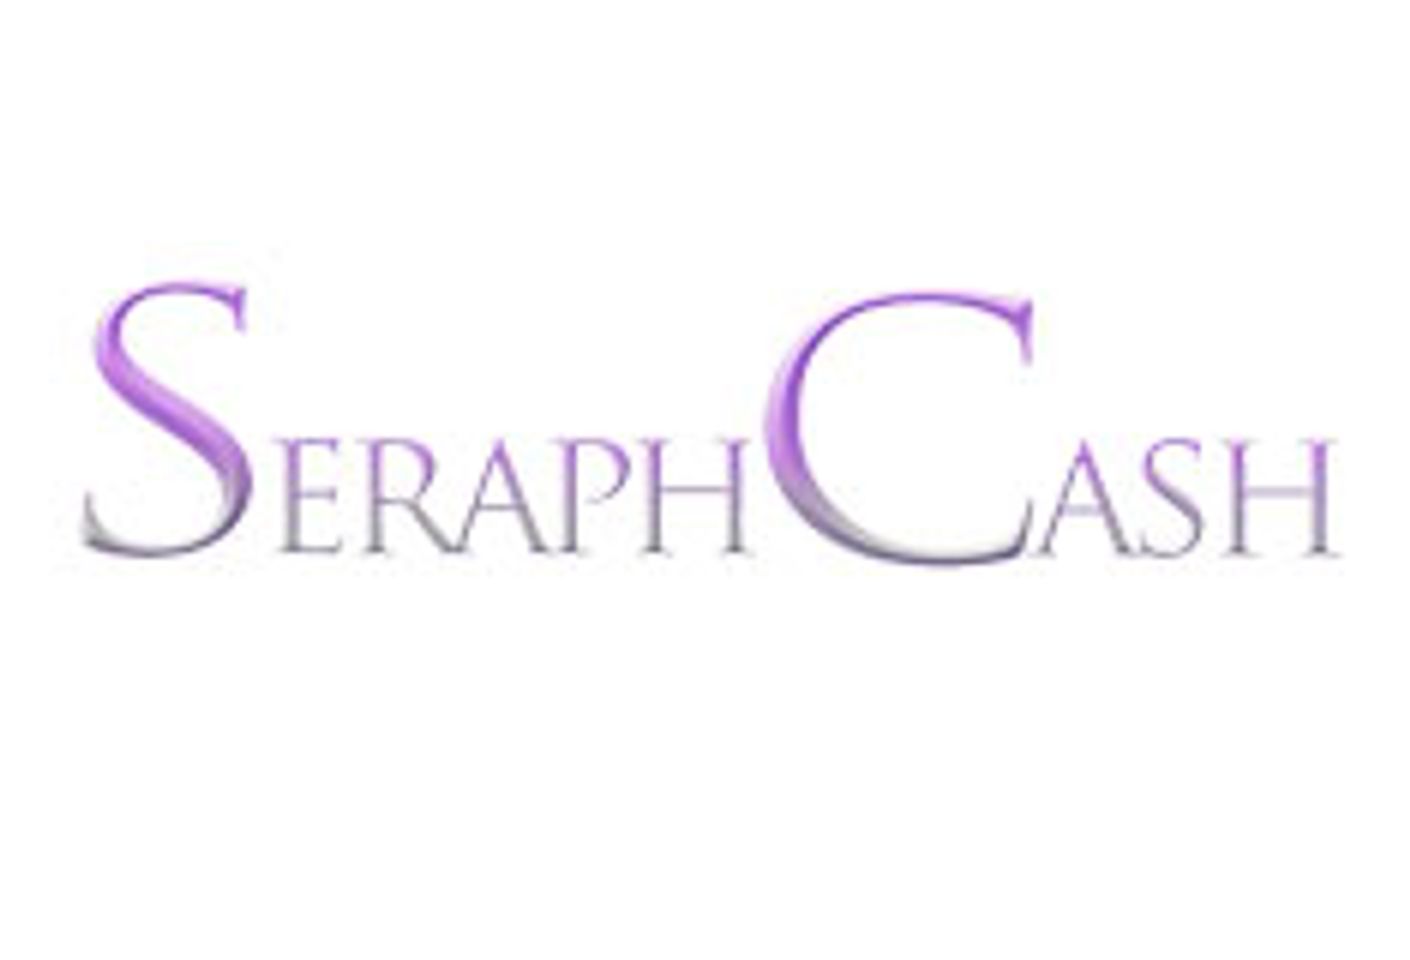 Seraph Cash Launches